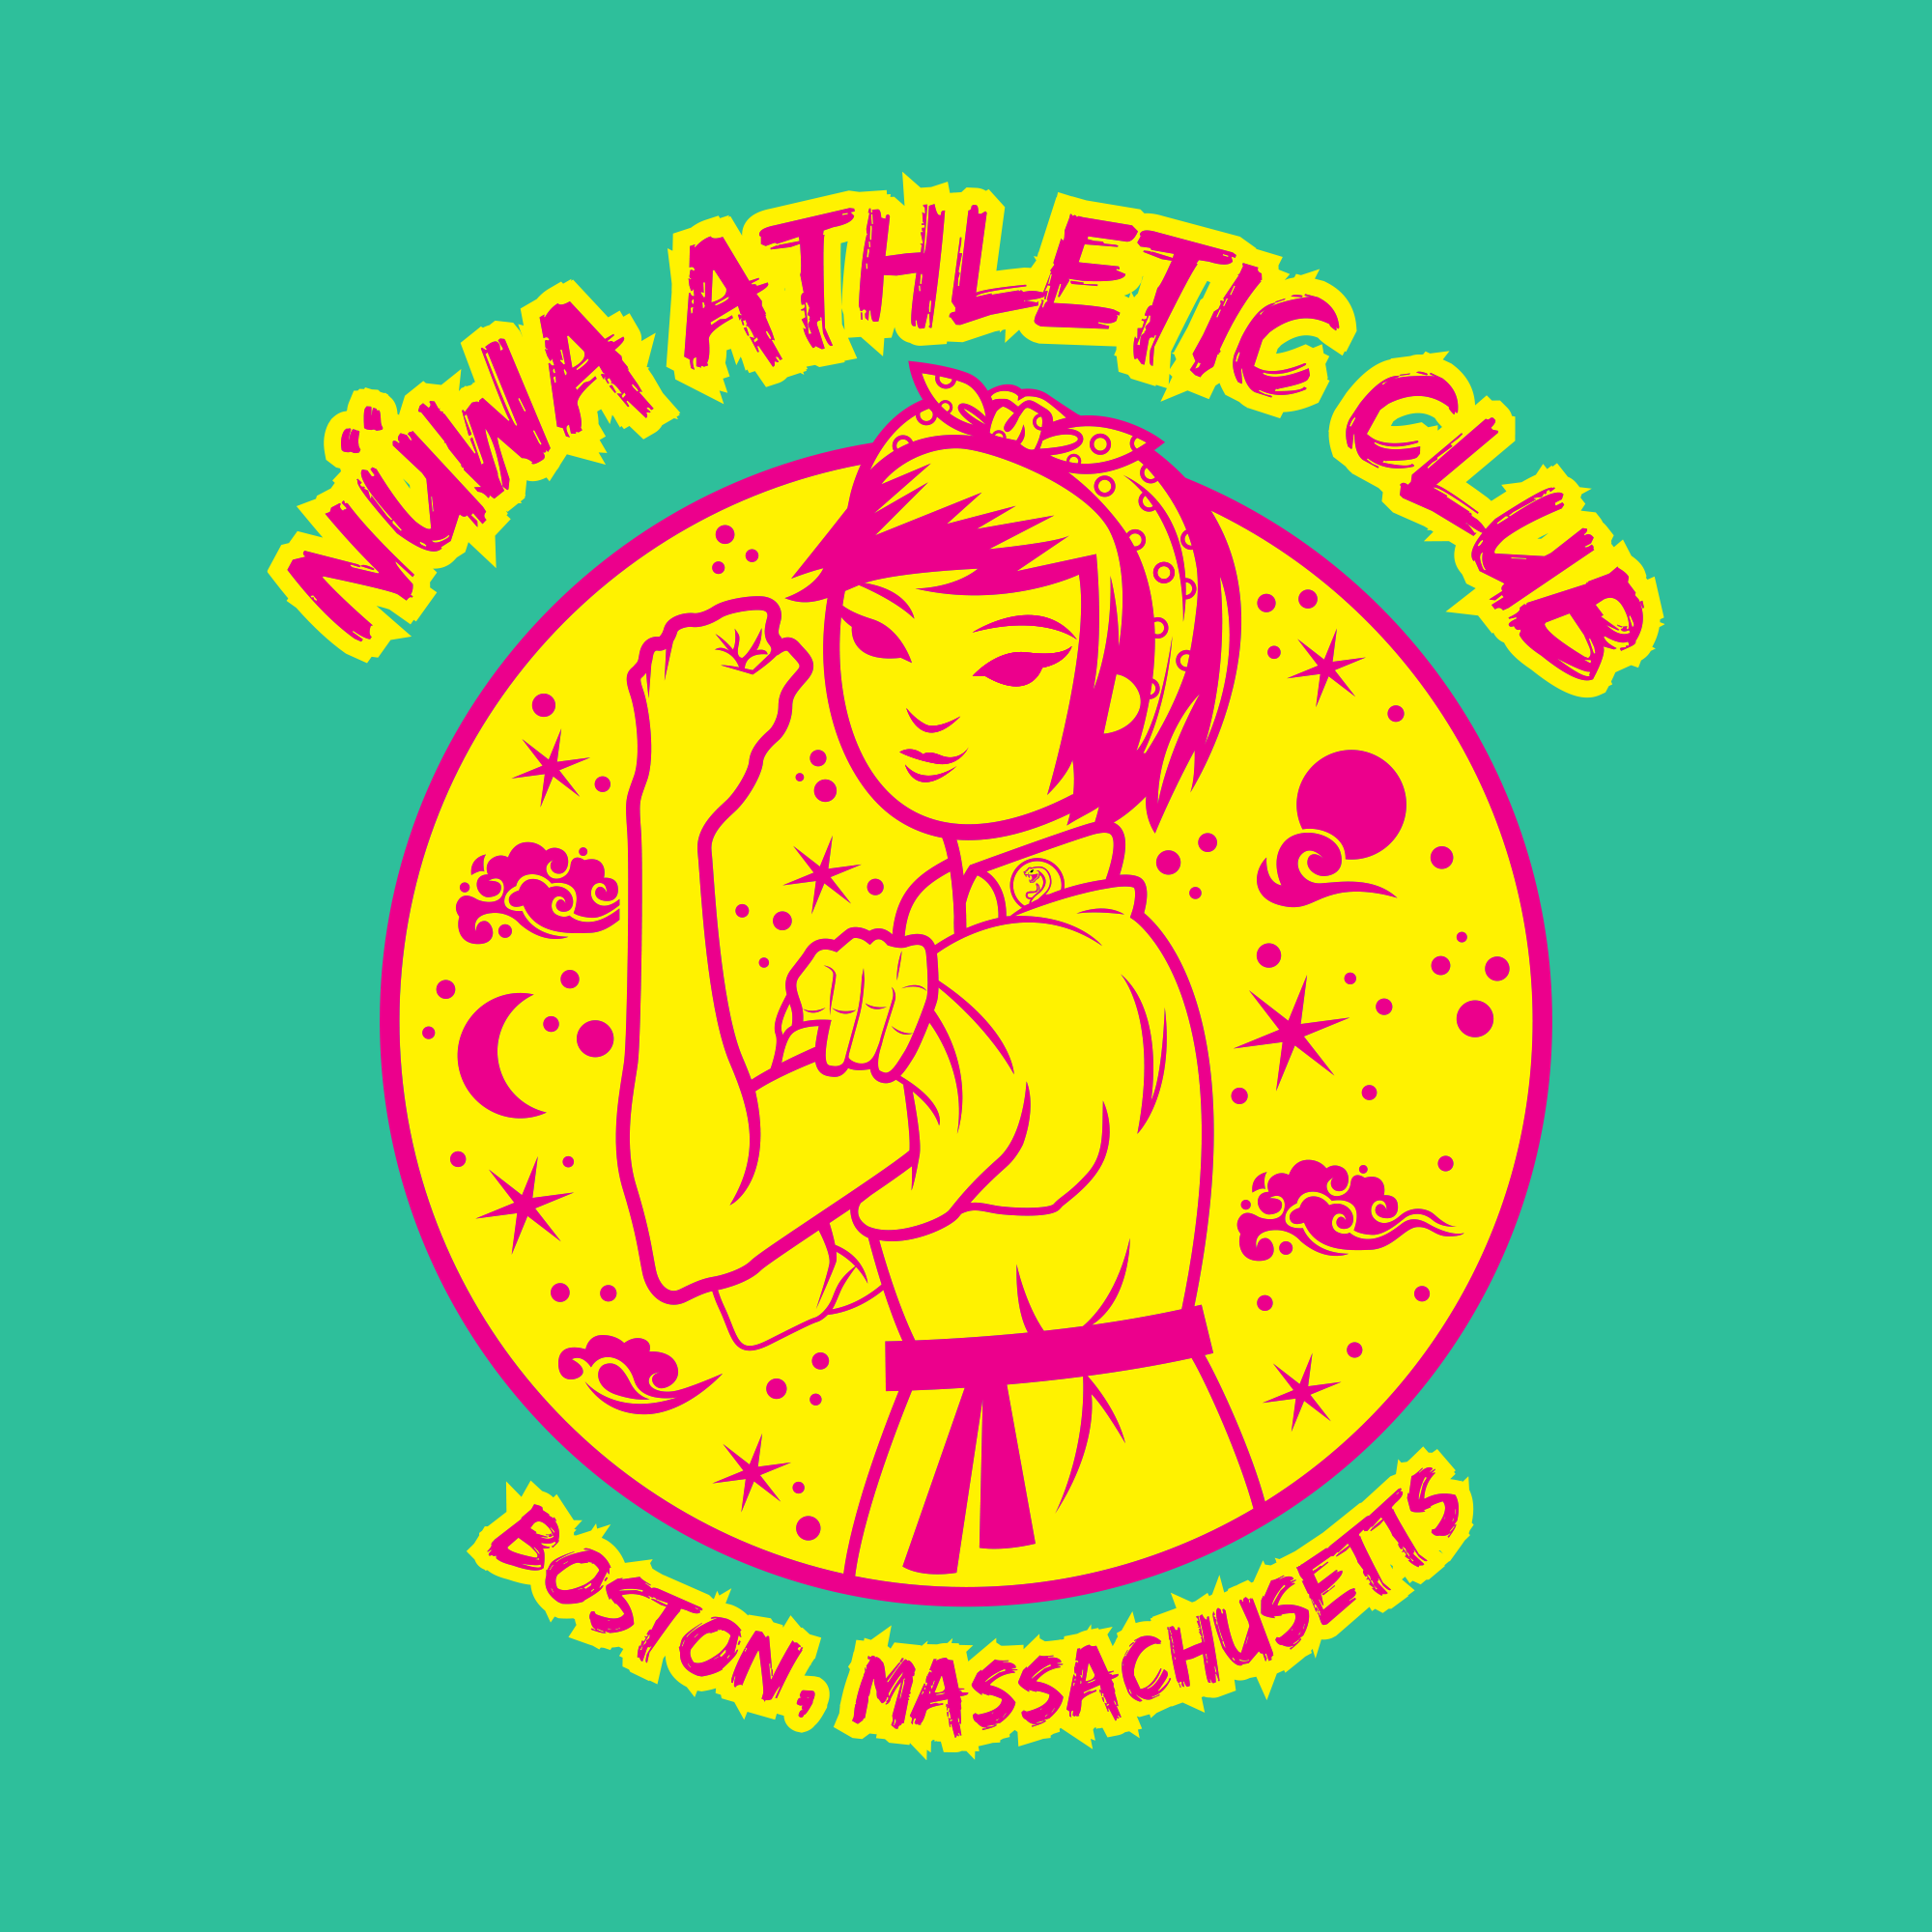  Nüwa Athletic Club Logo and Branding